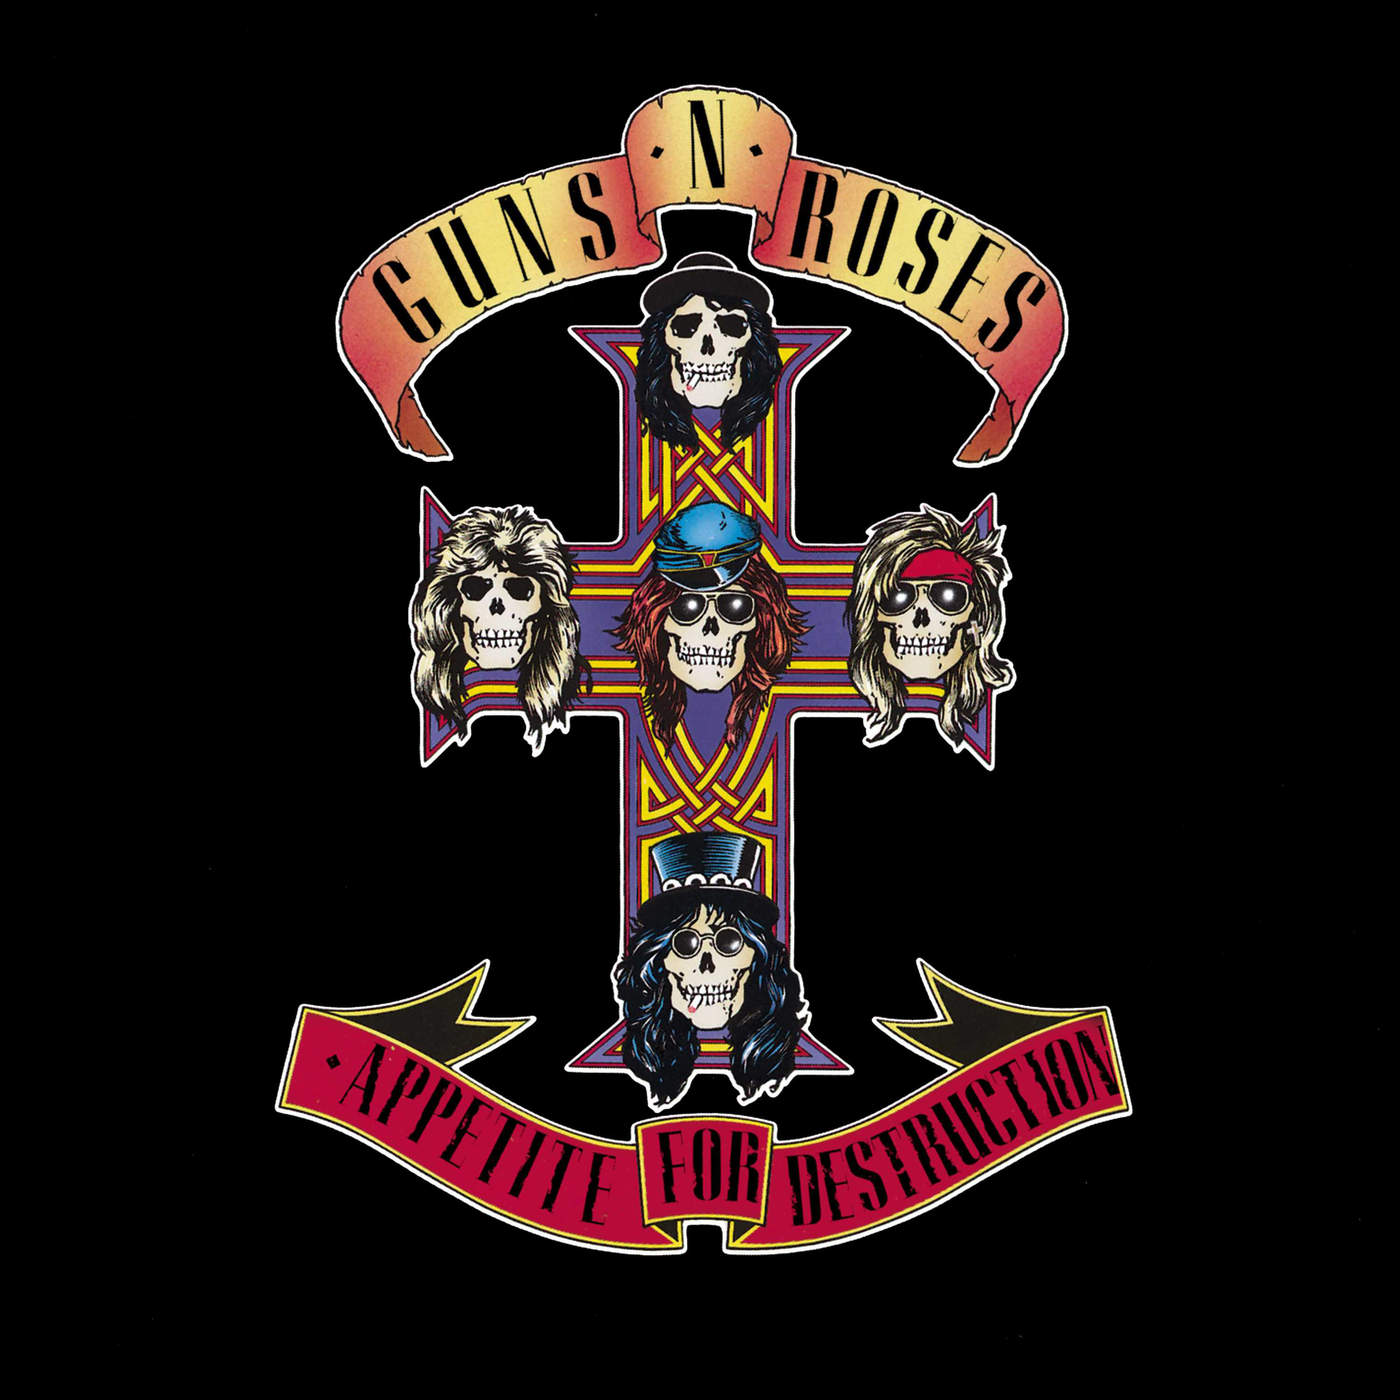 Guns N' Roses - Appetite For Destruction (Super Deluxe) [Explicit] [Mastered for iTunes] (2018) - Album [iTunes Plus AAC M4A]